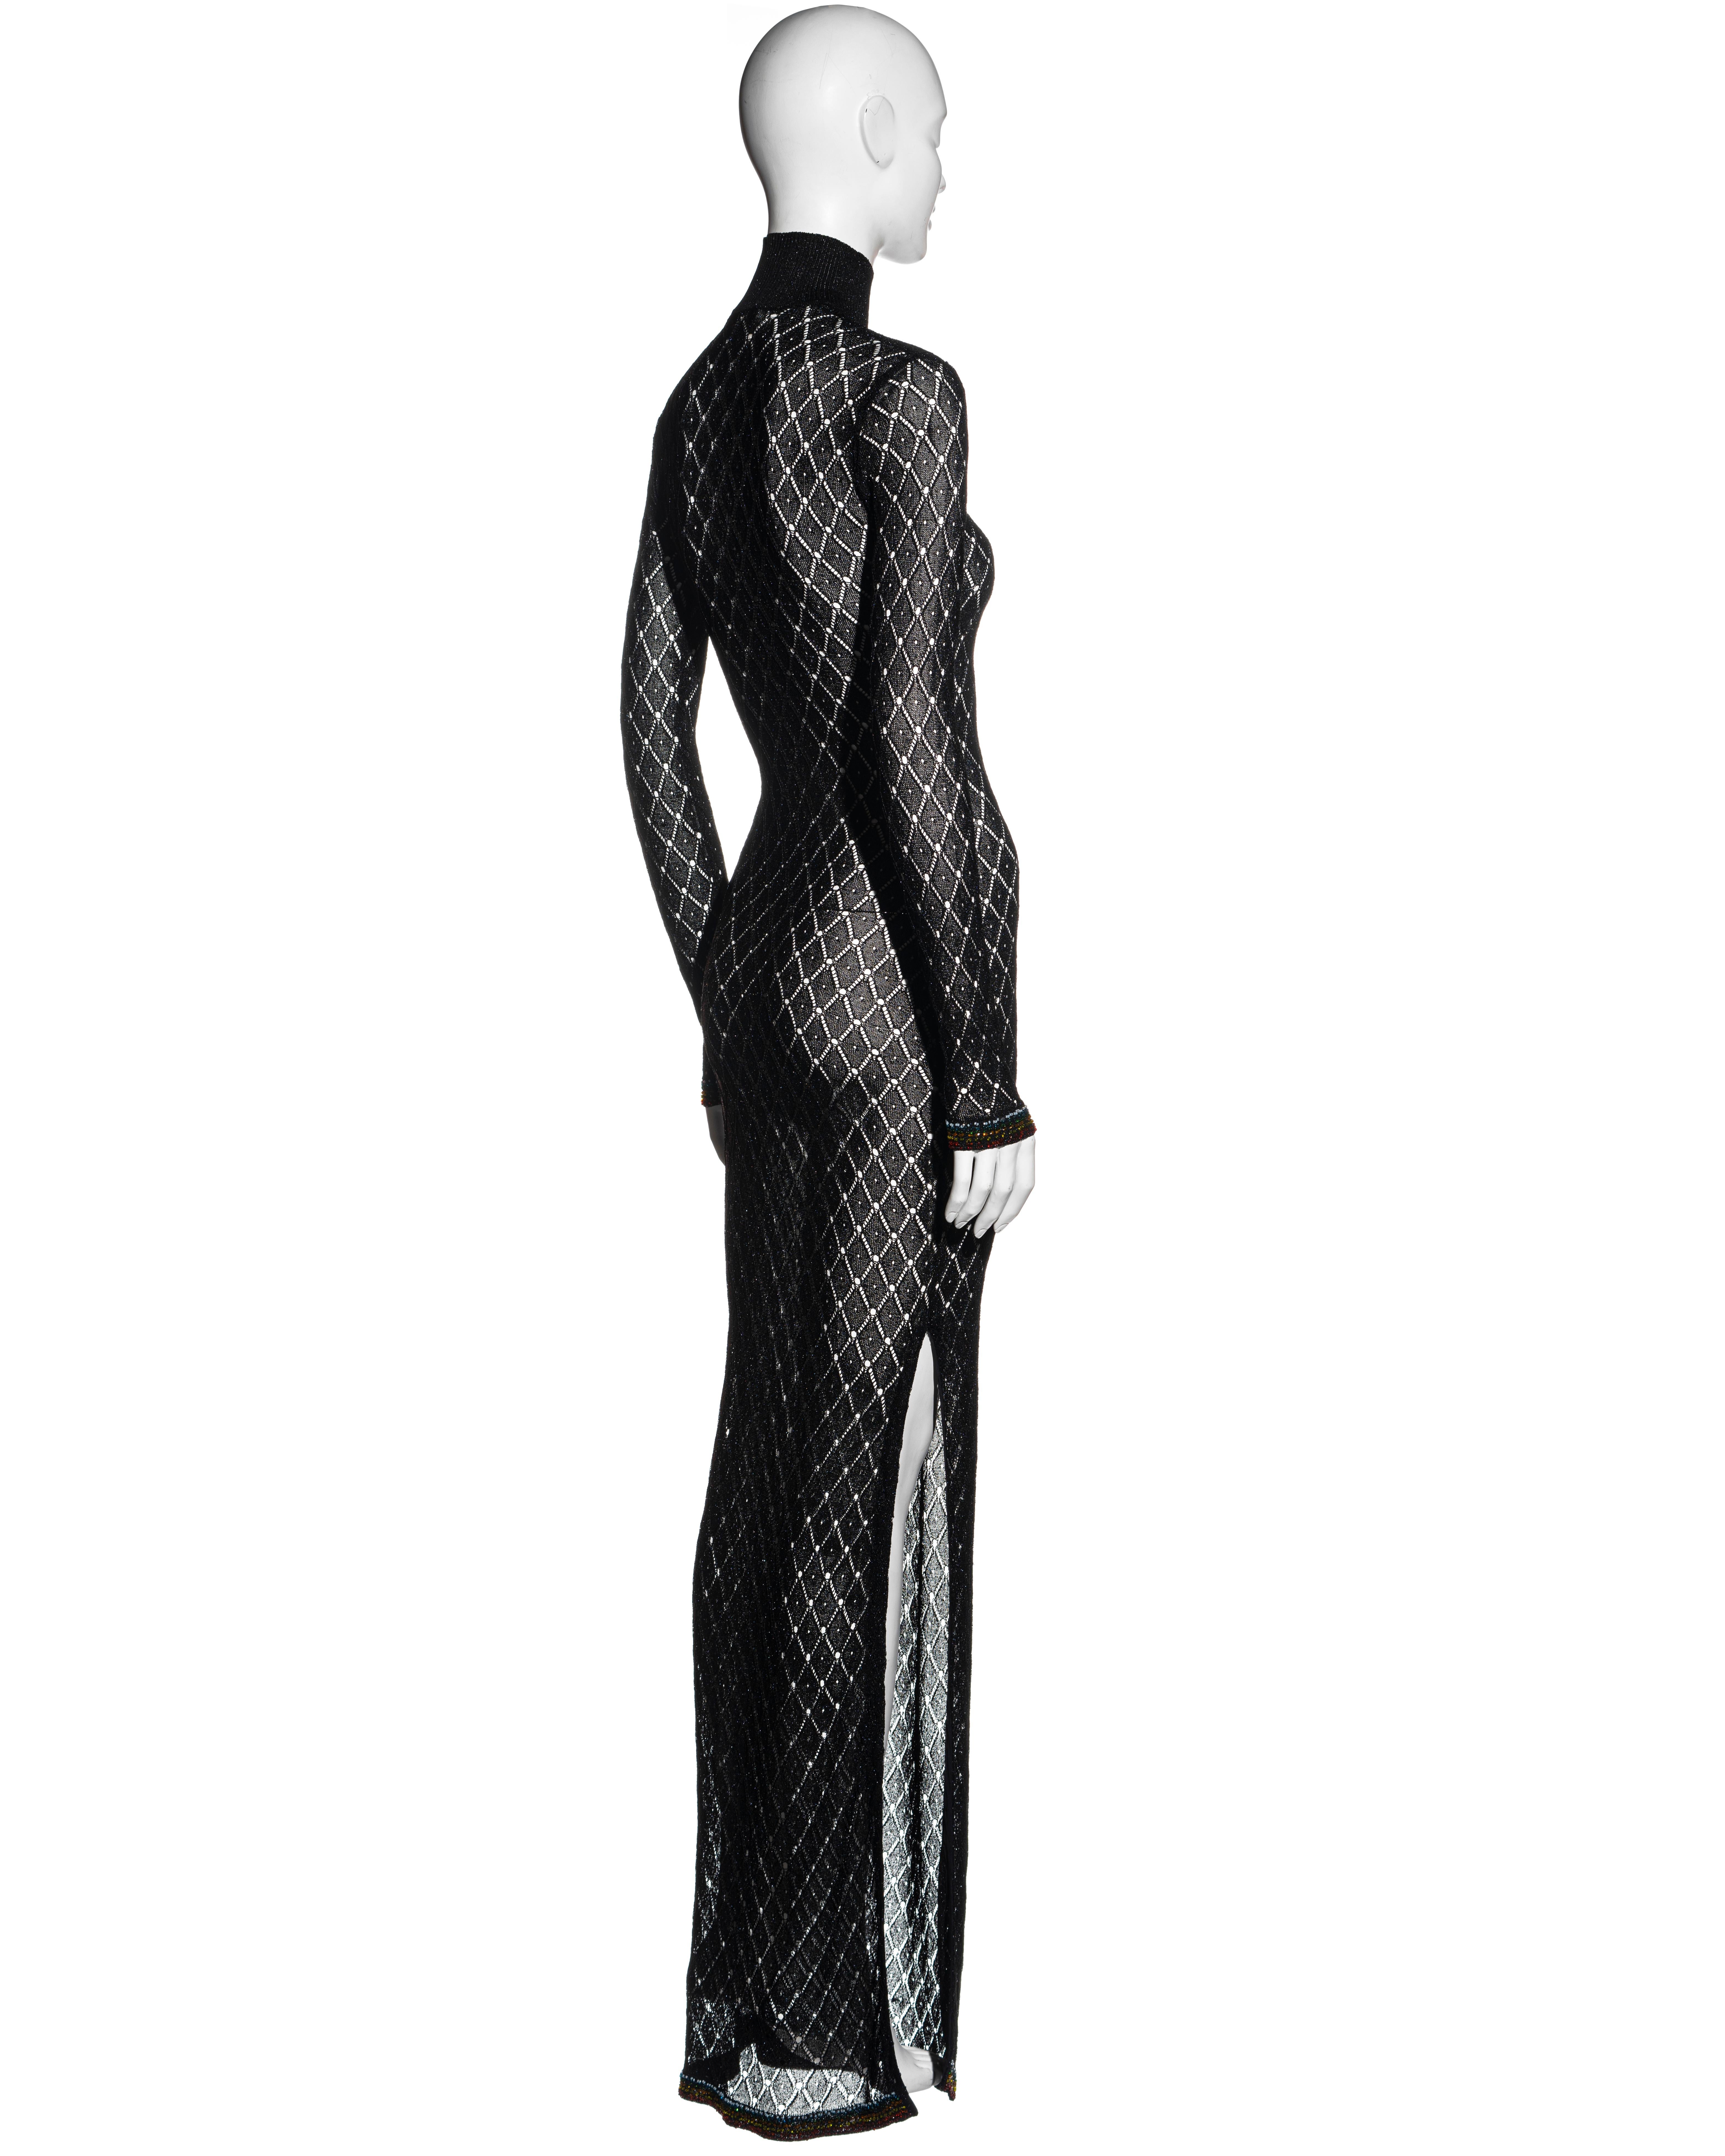 Christian Dior by John Galliano black open knit beaded maxi dress, fw 2001 2